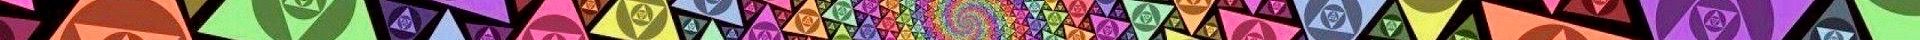 triangle-rainbow-fractal-swirl (2).jpg